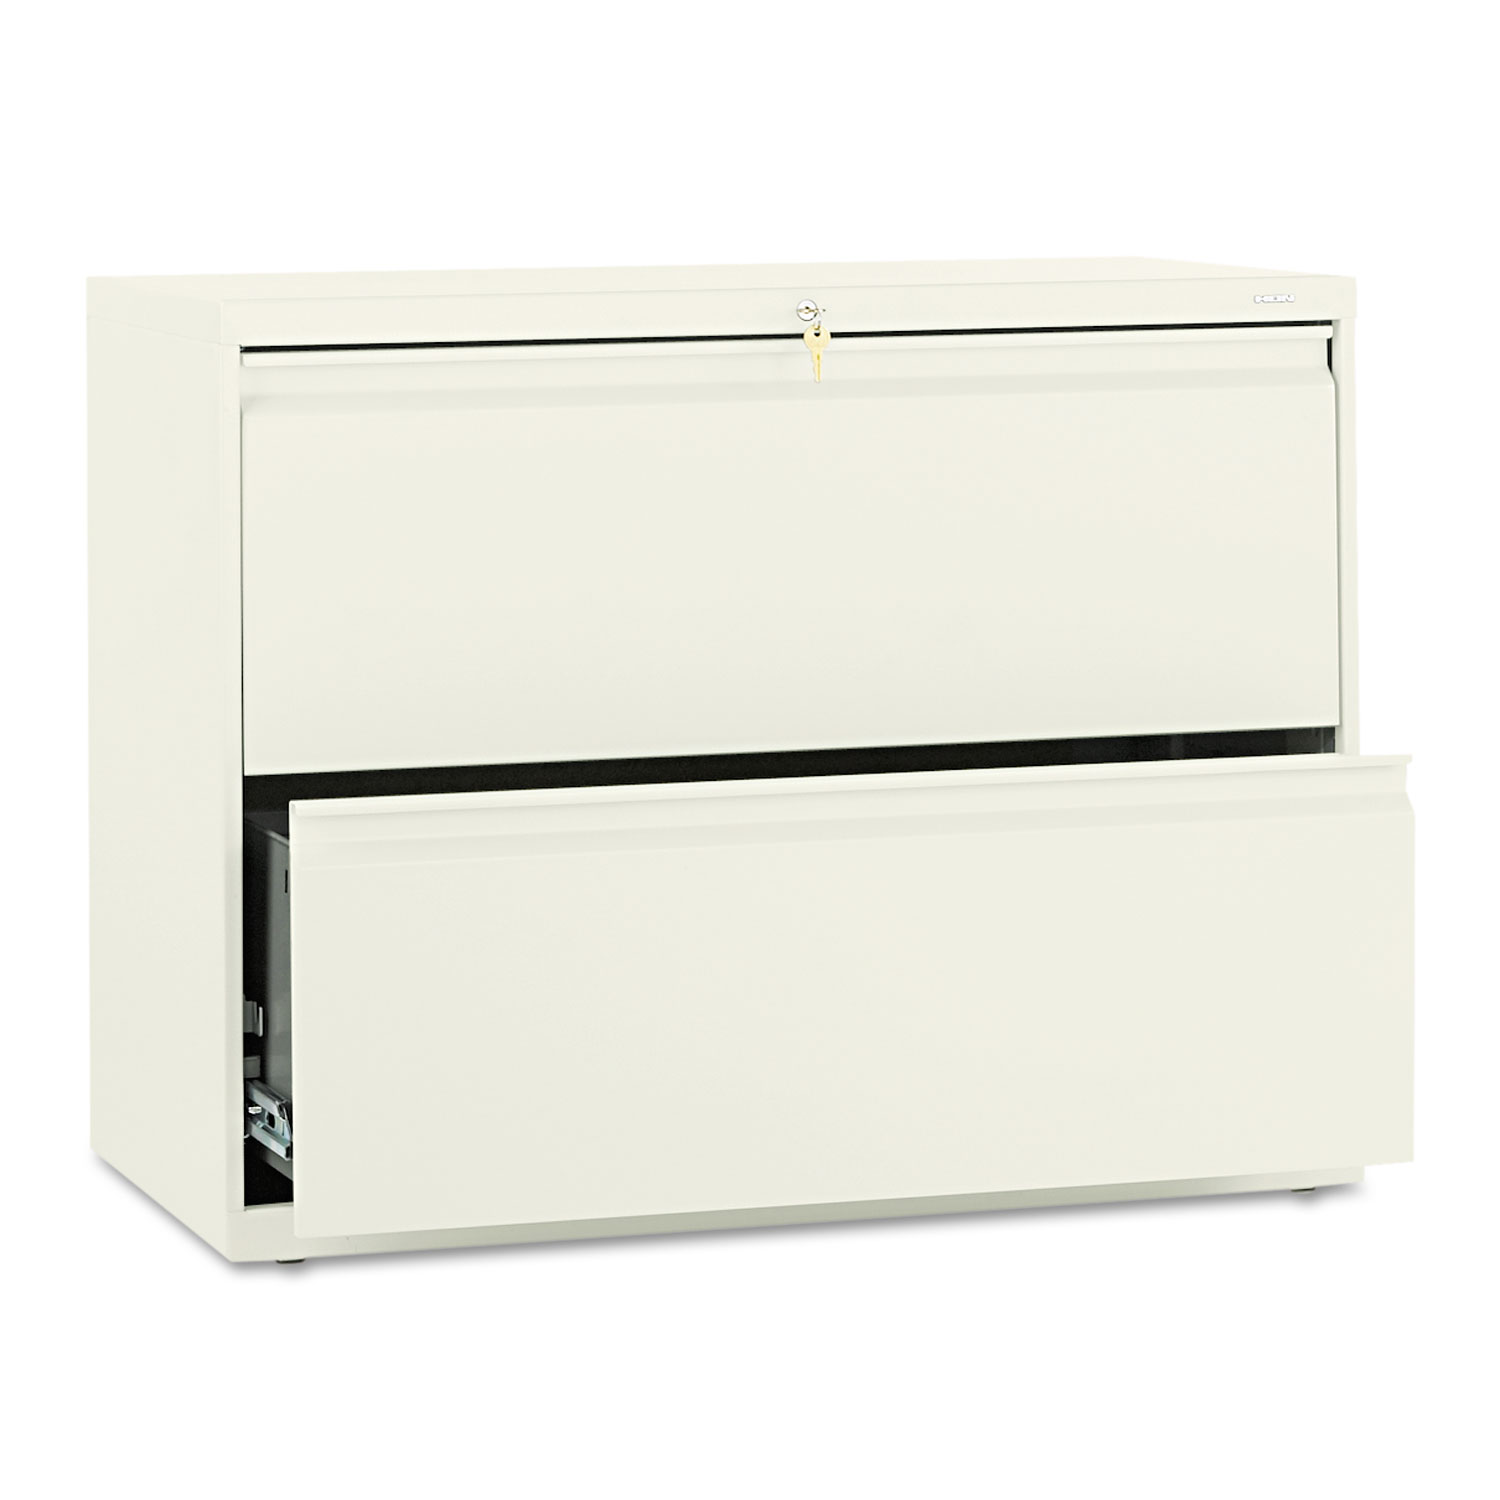  HON H882.L.L 800 Series Two-Drawer Lateral File, 36w x 19.25d x 28.38h, Putty (HON882LL) 